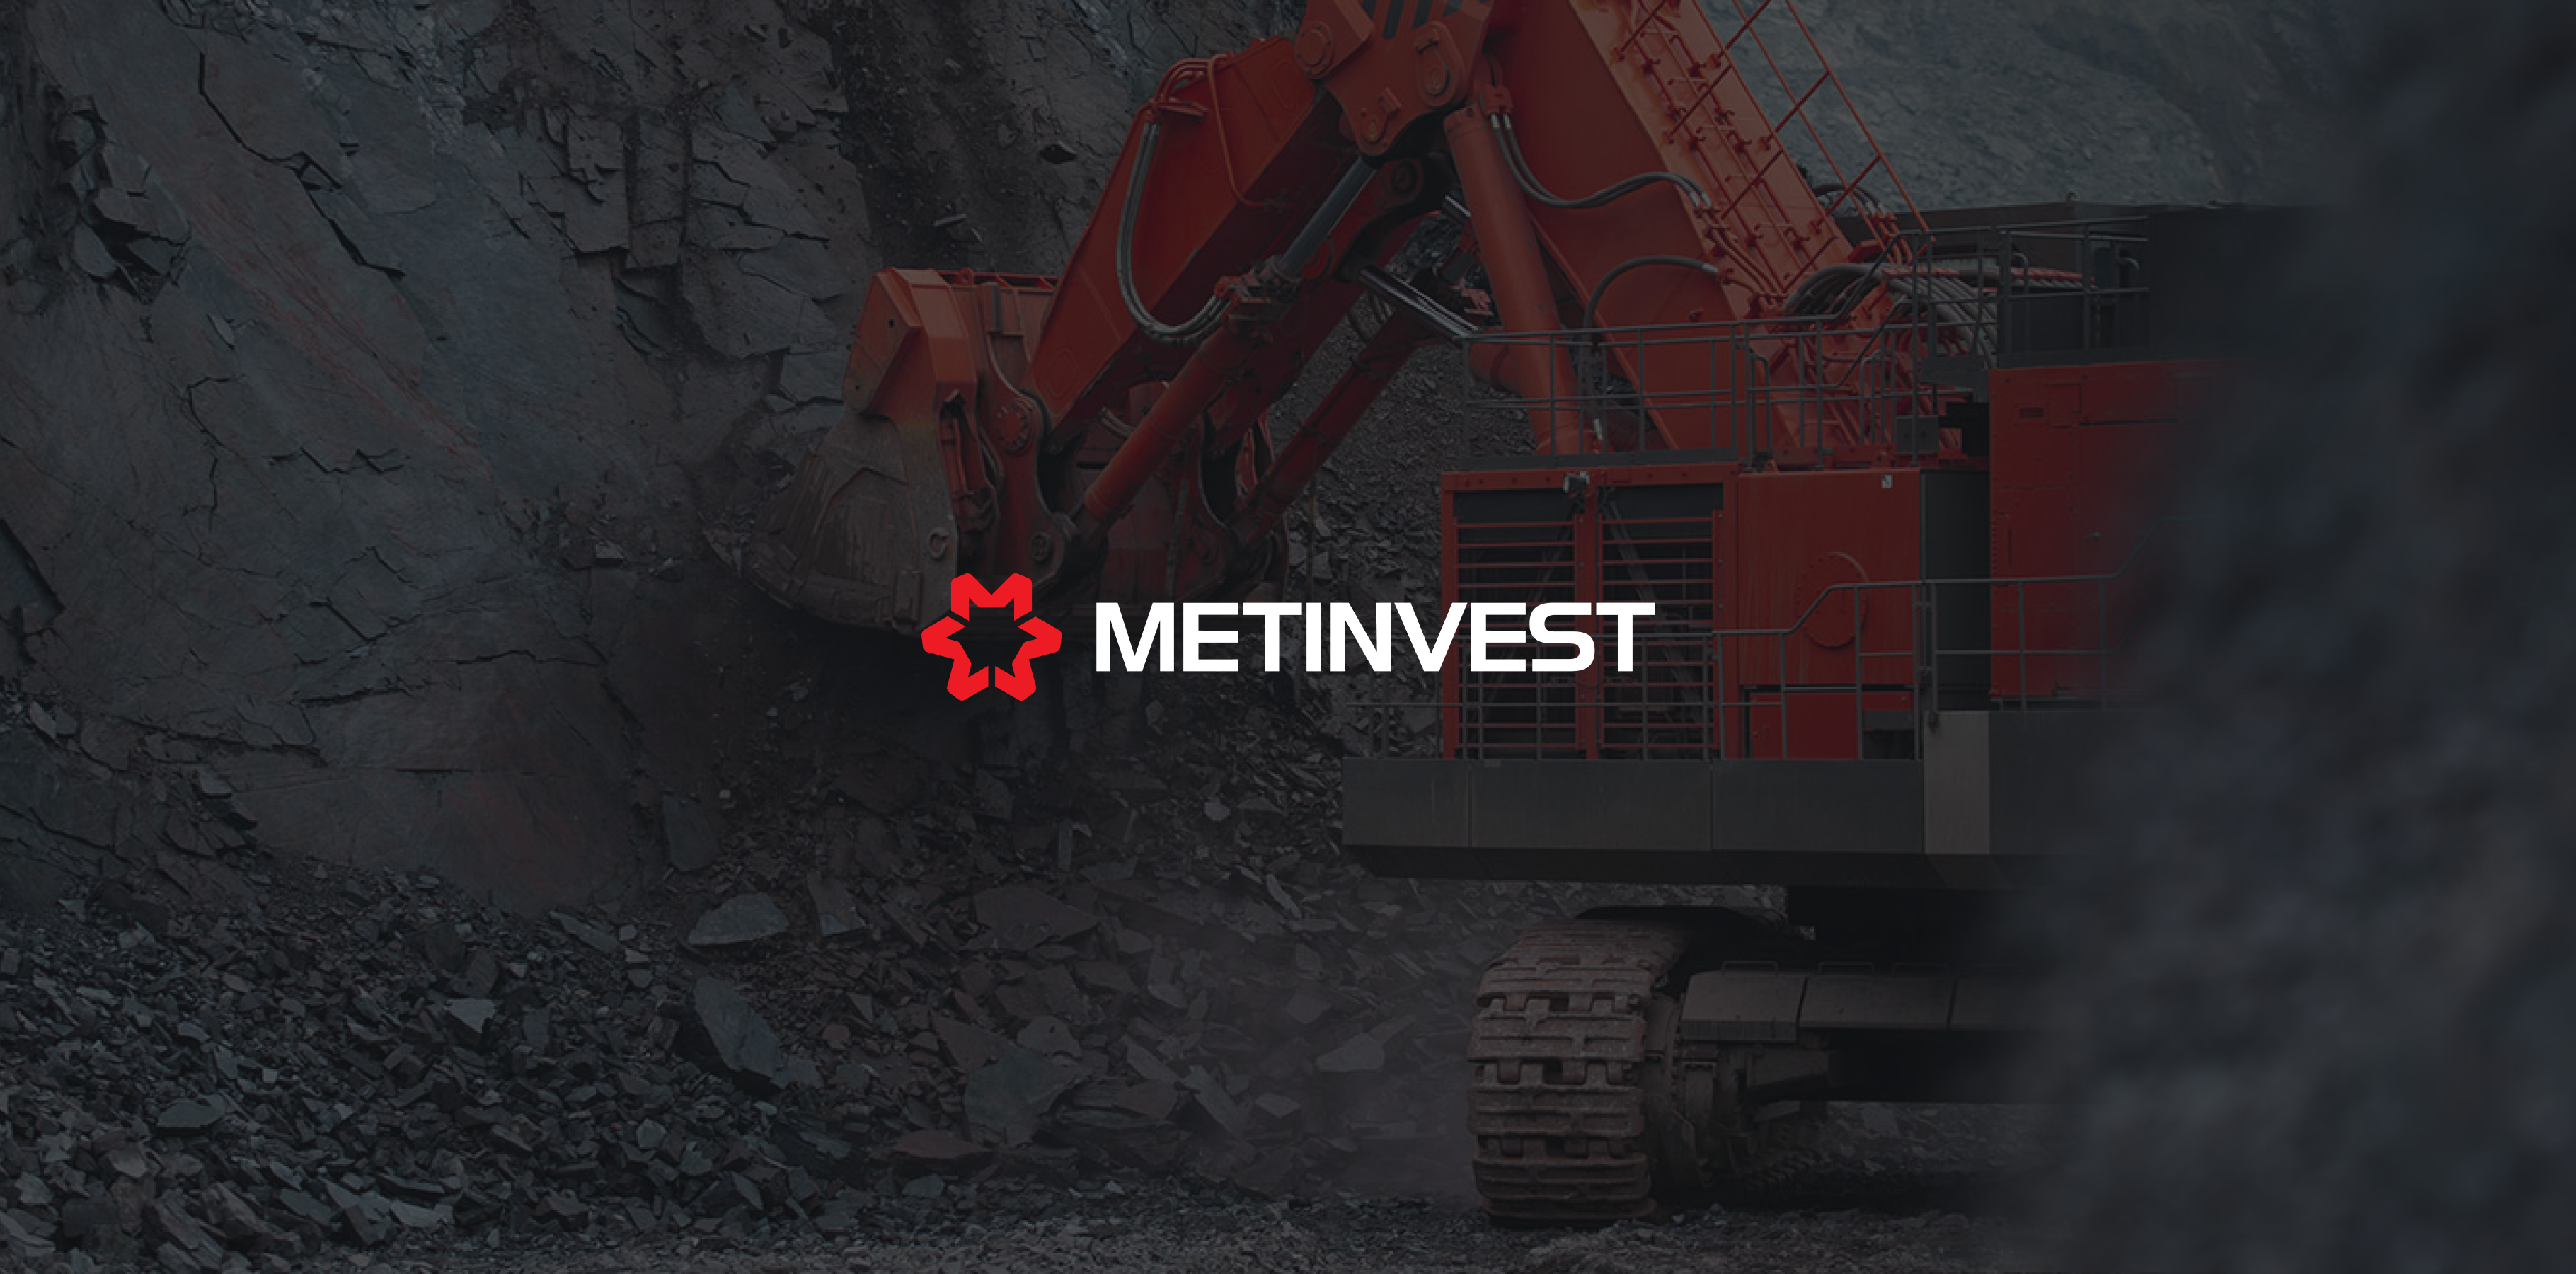 Metinvest corporate website 